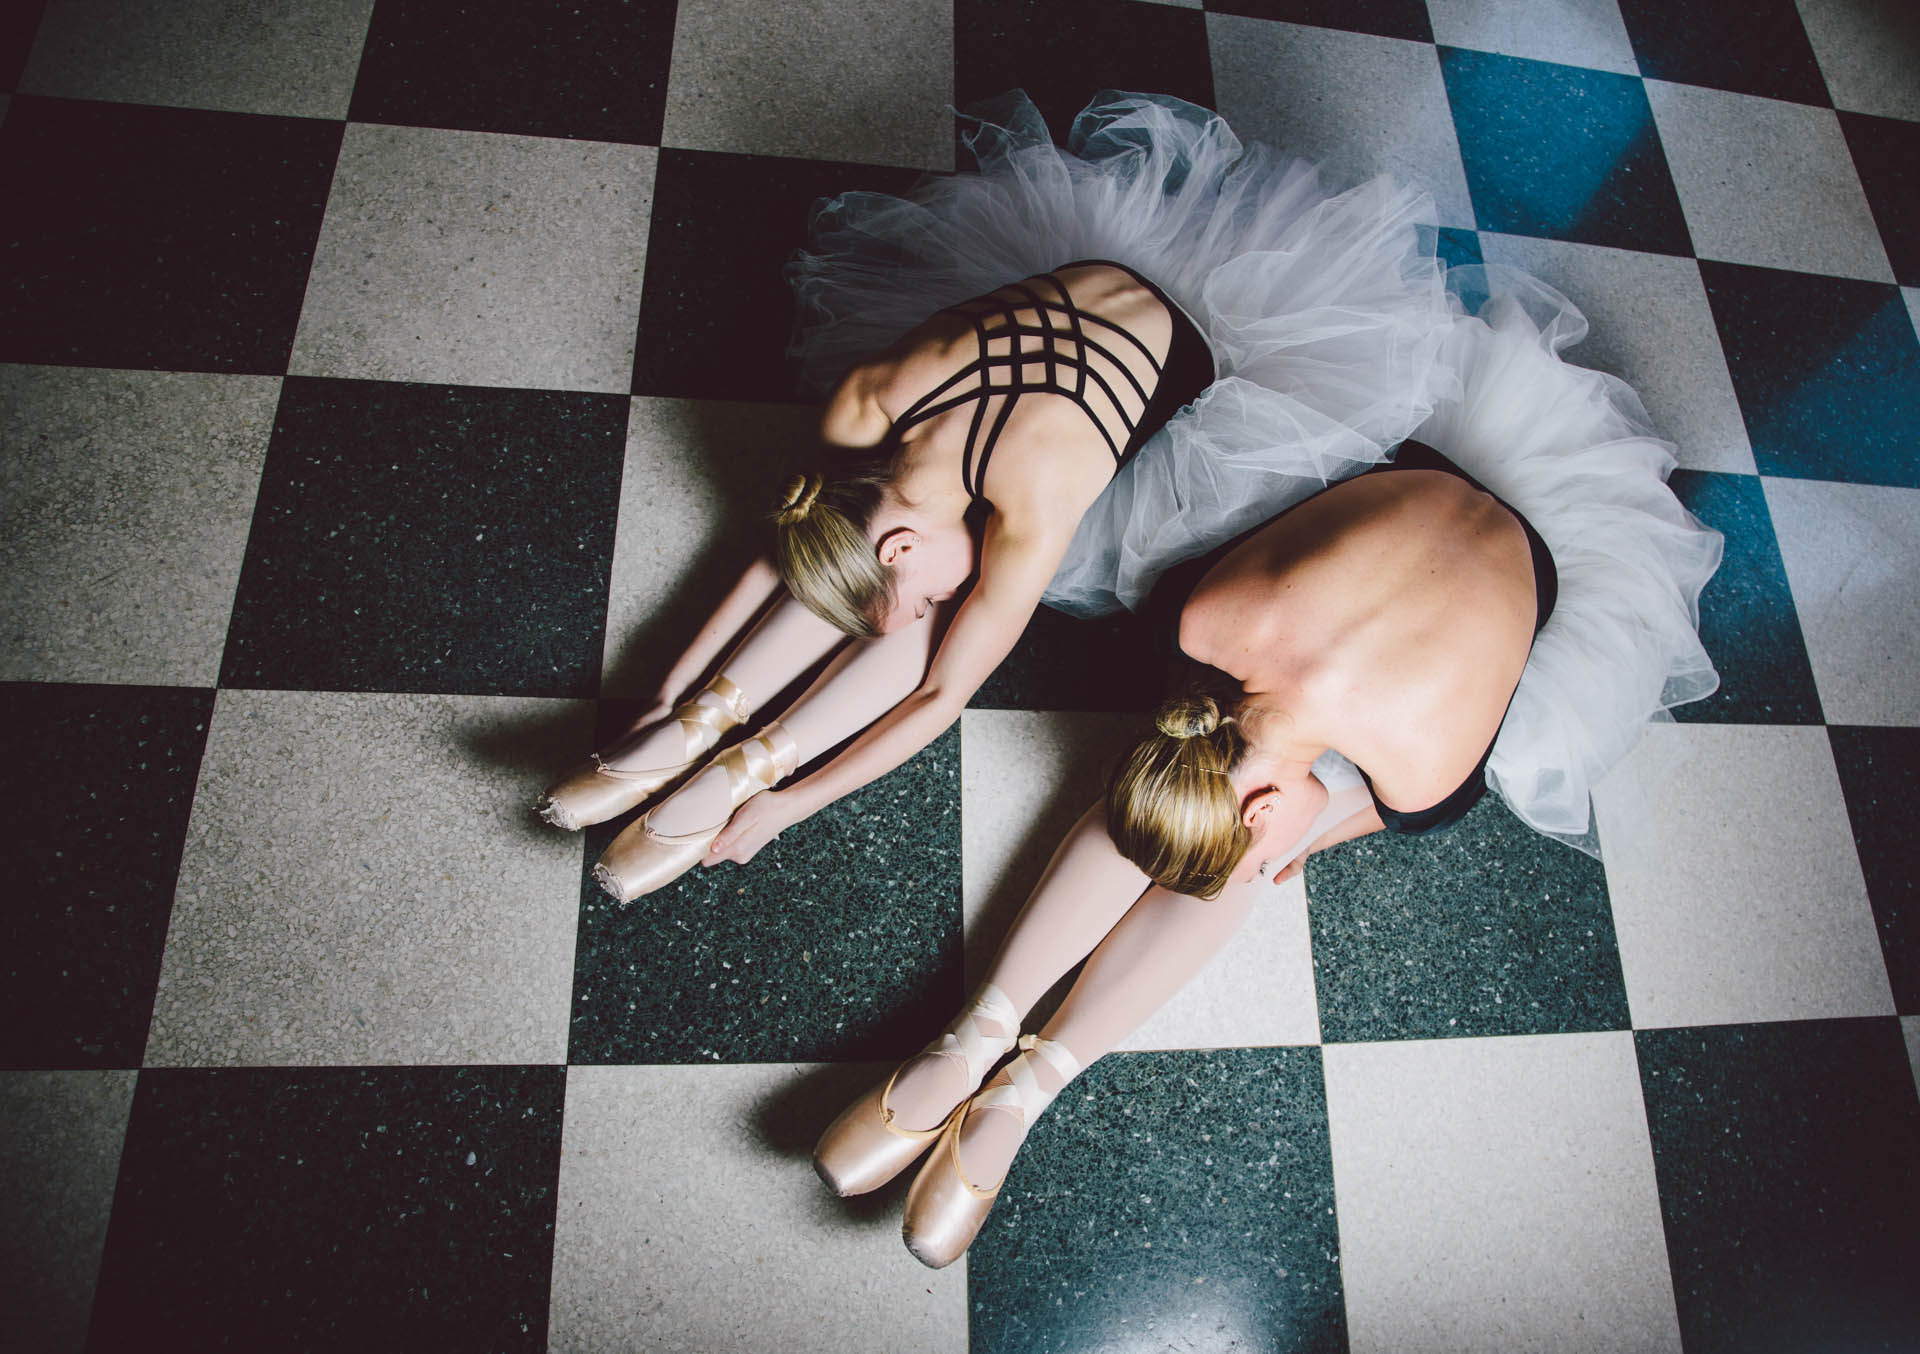 luisa-jenika-ballerinas-tutus-backs-laying-on-checkered-floor-9672